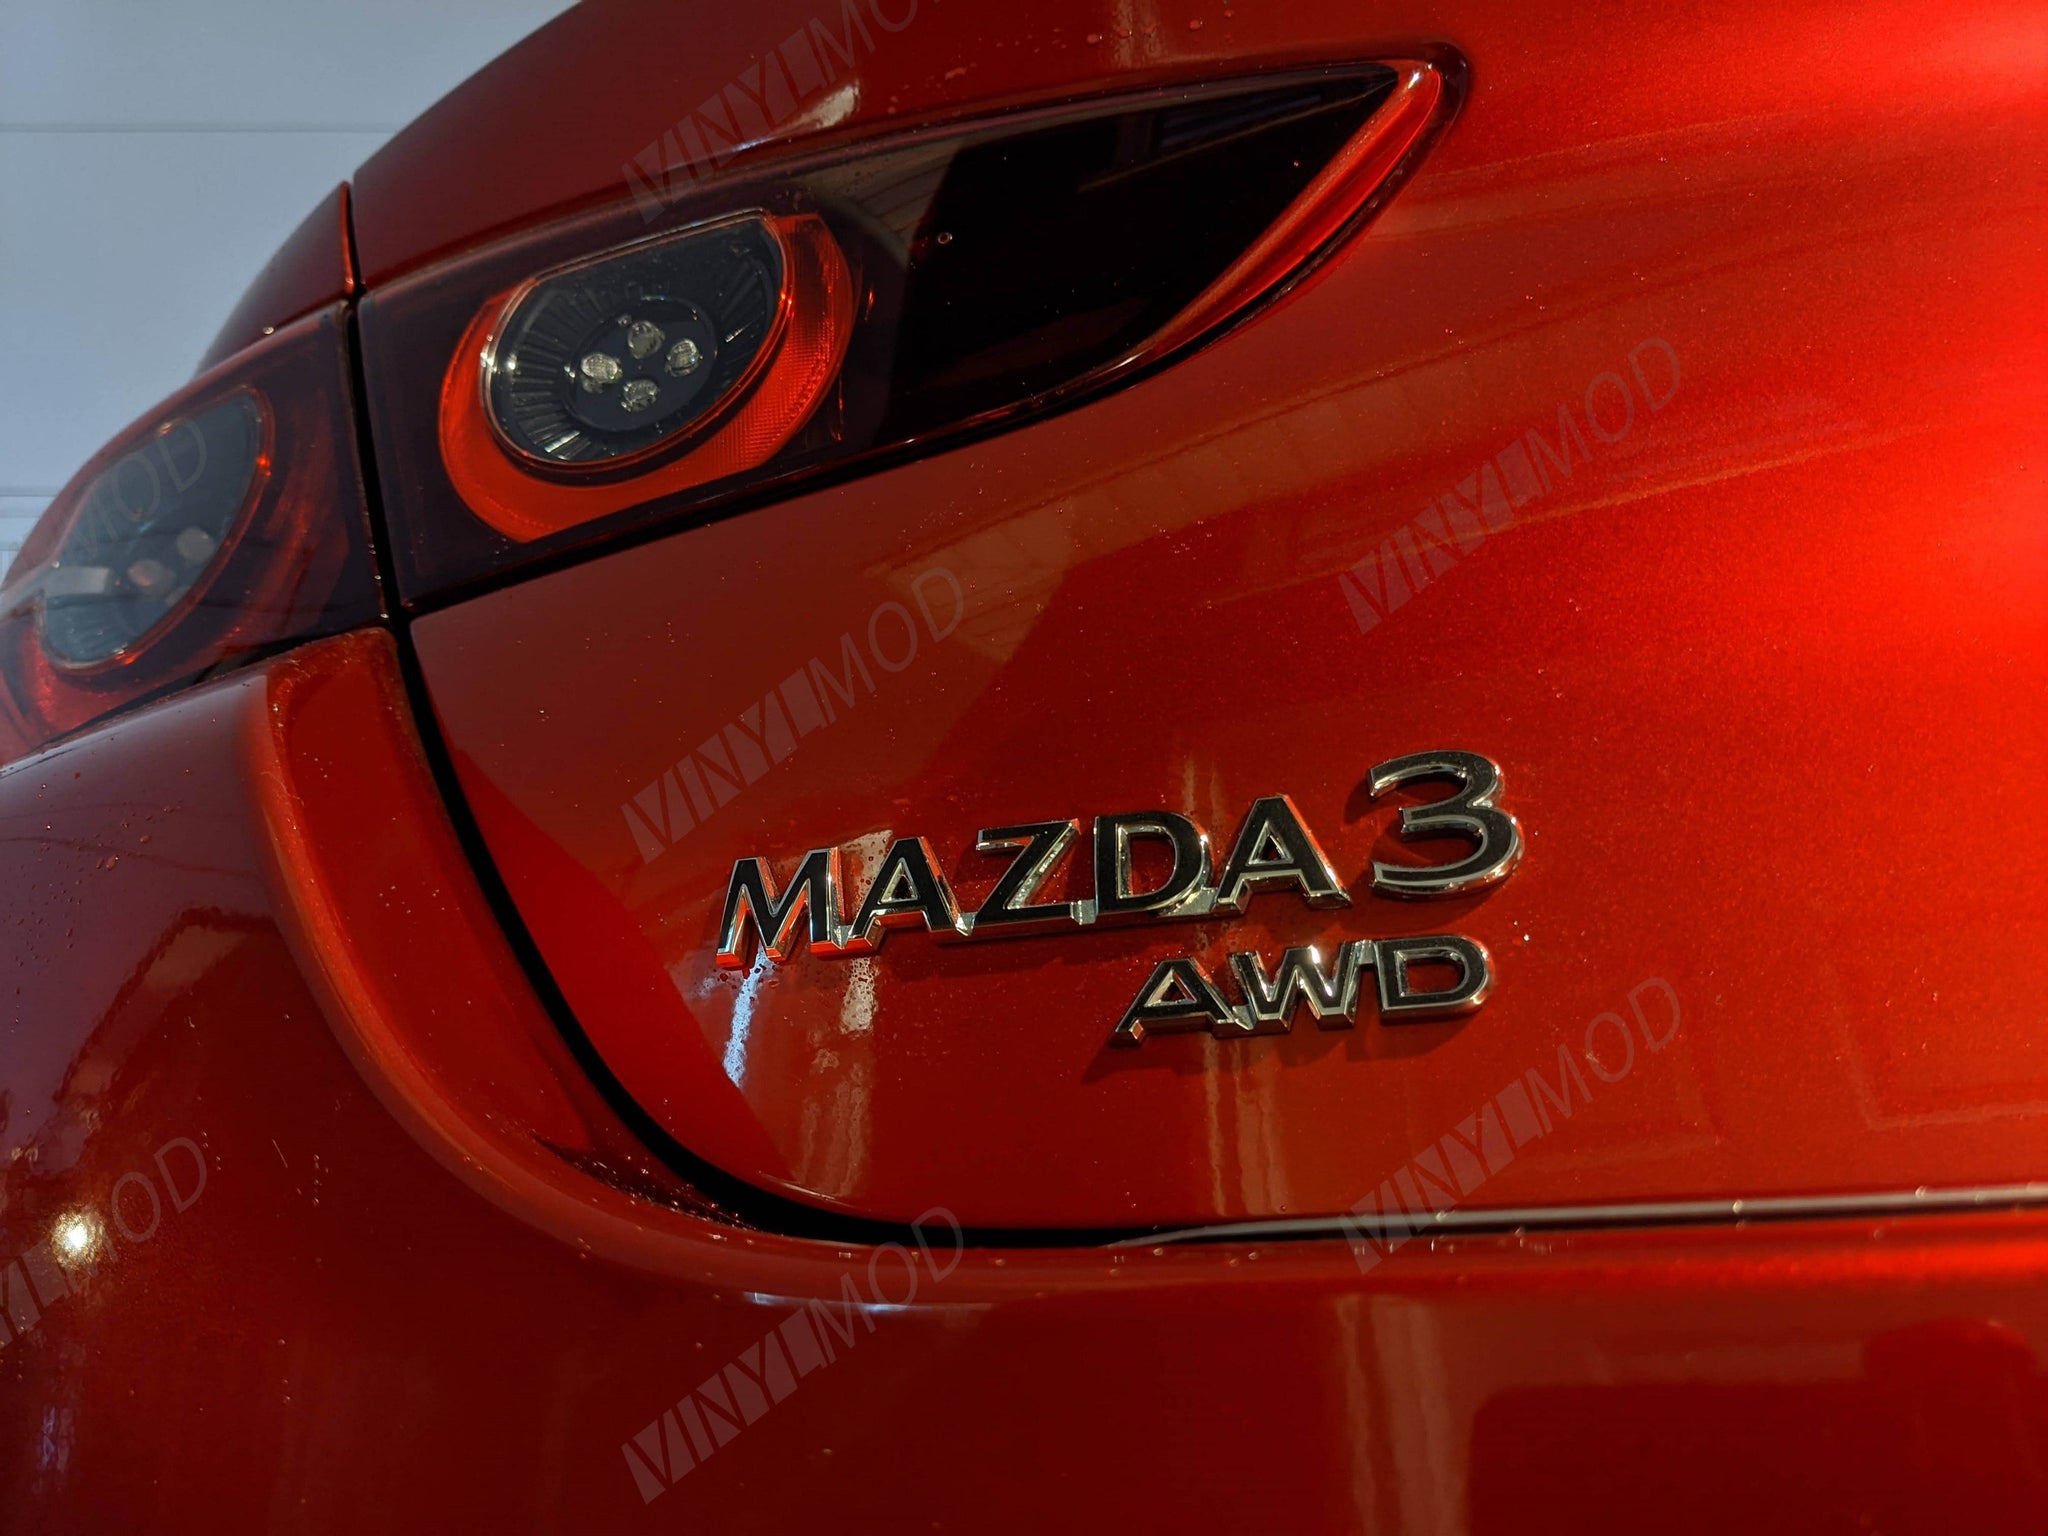 2019+ (4th Gen) Mazda 3 - Rear AWD Emblem VinylMod Overlays